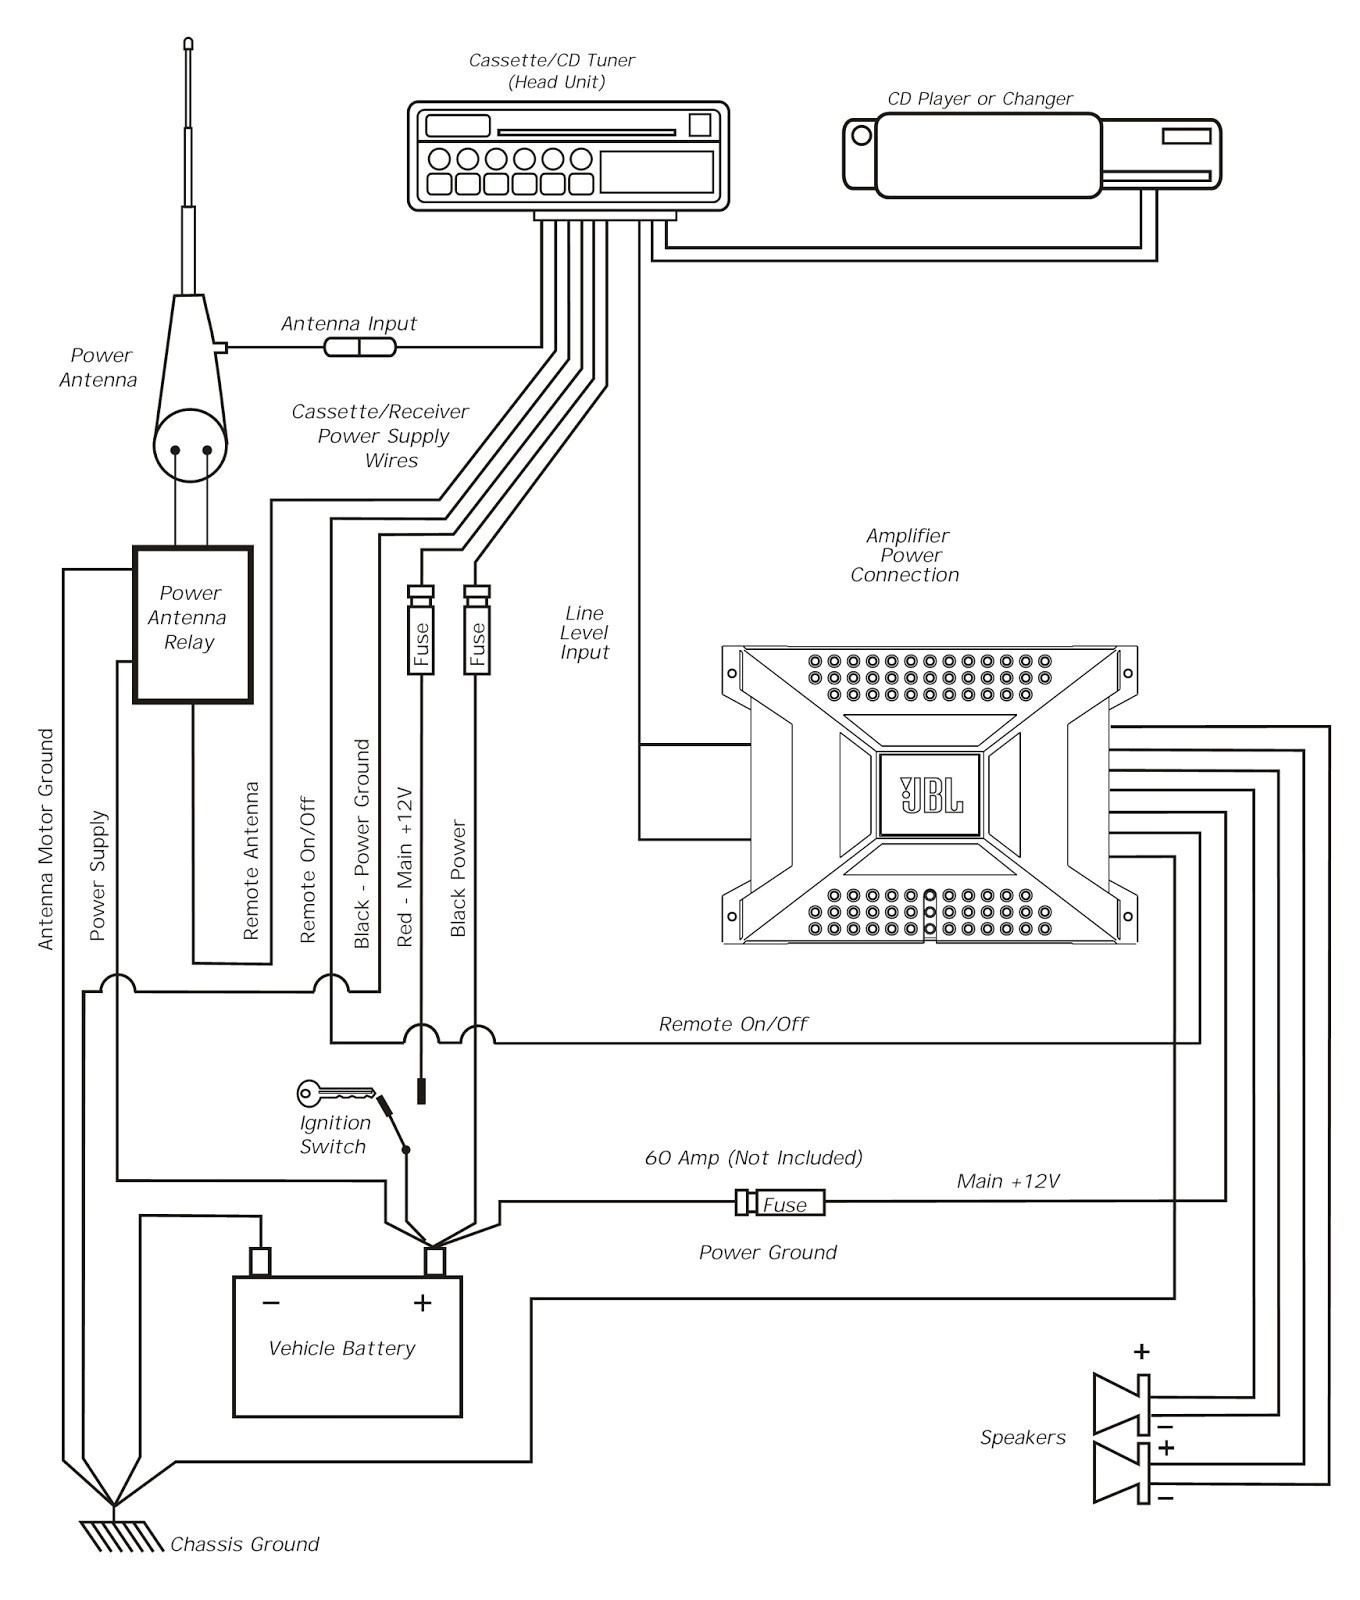 basic air conditioning wiring diagram best of air conditioner wiring diagram picture book wiring diagram air